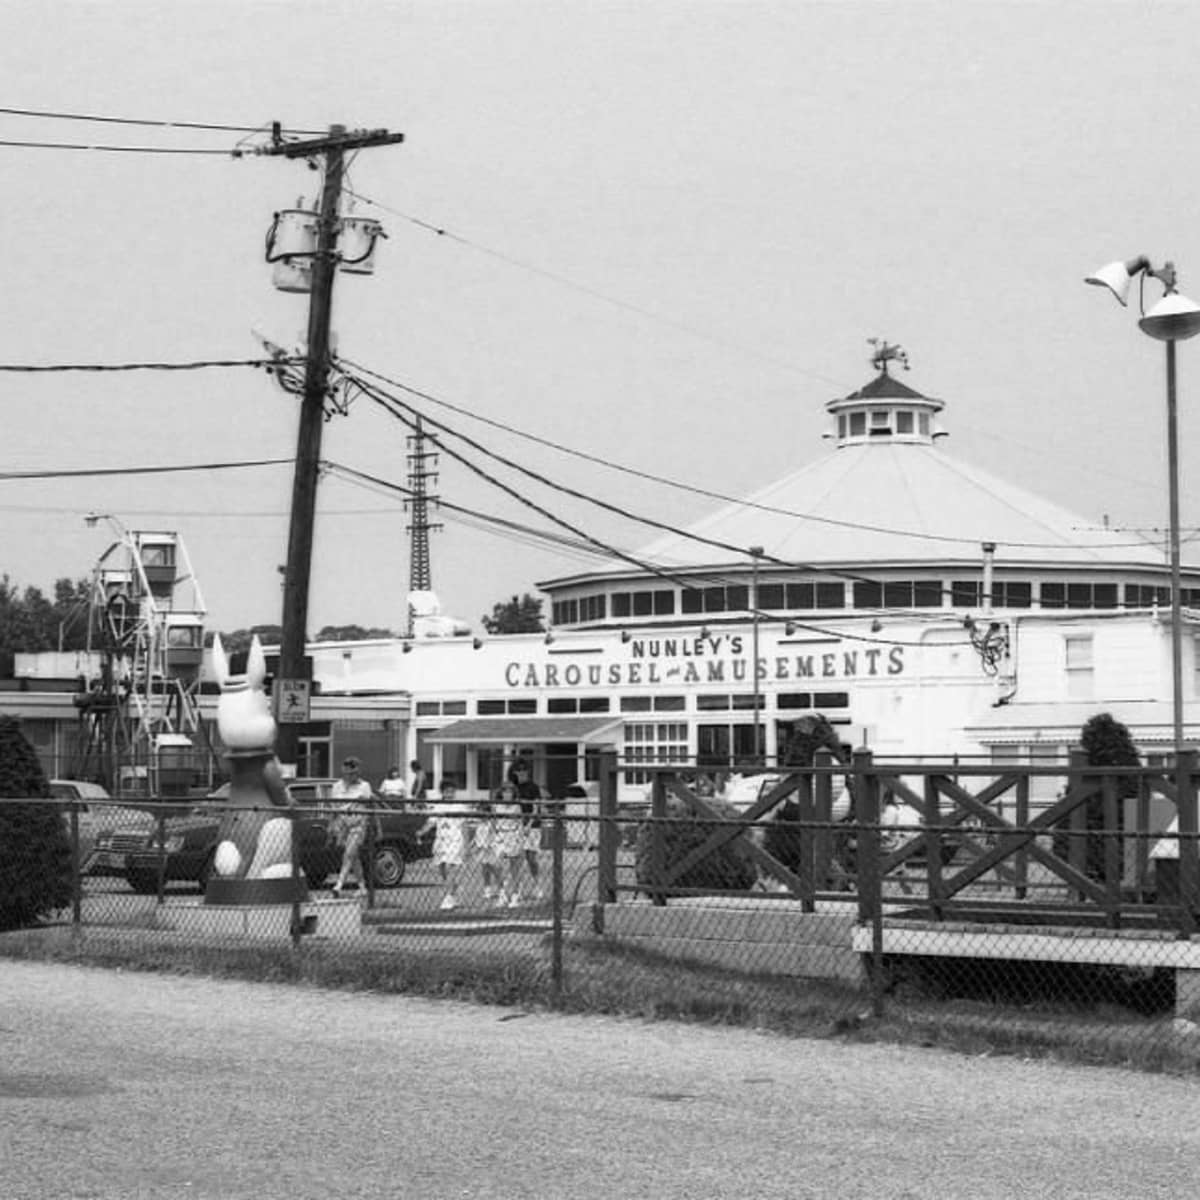 Images of America Nunley's Amusement Park